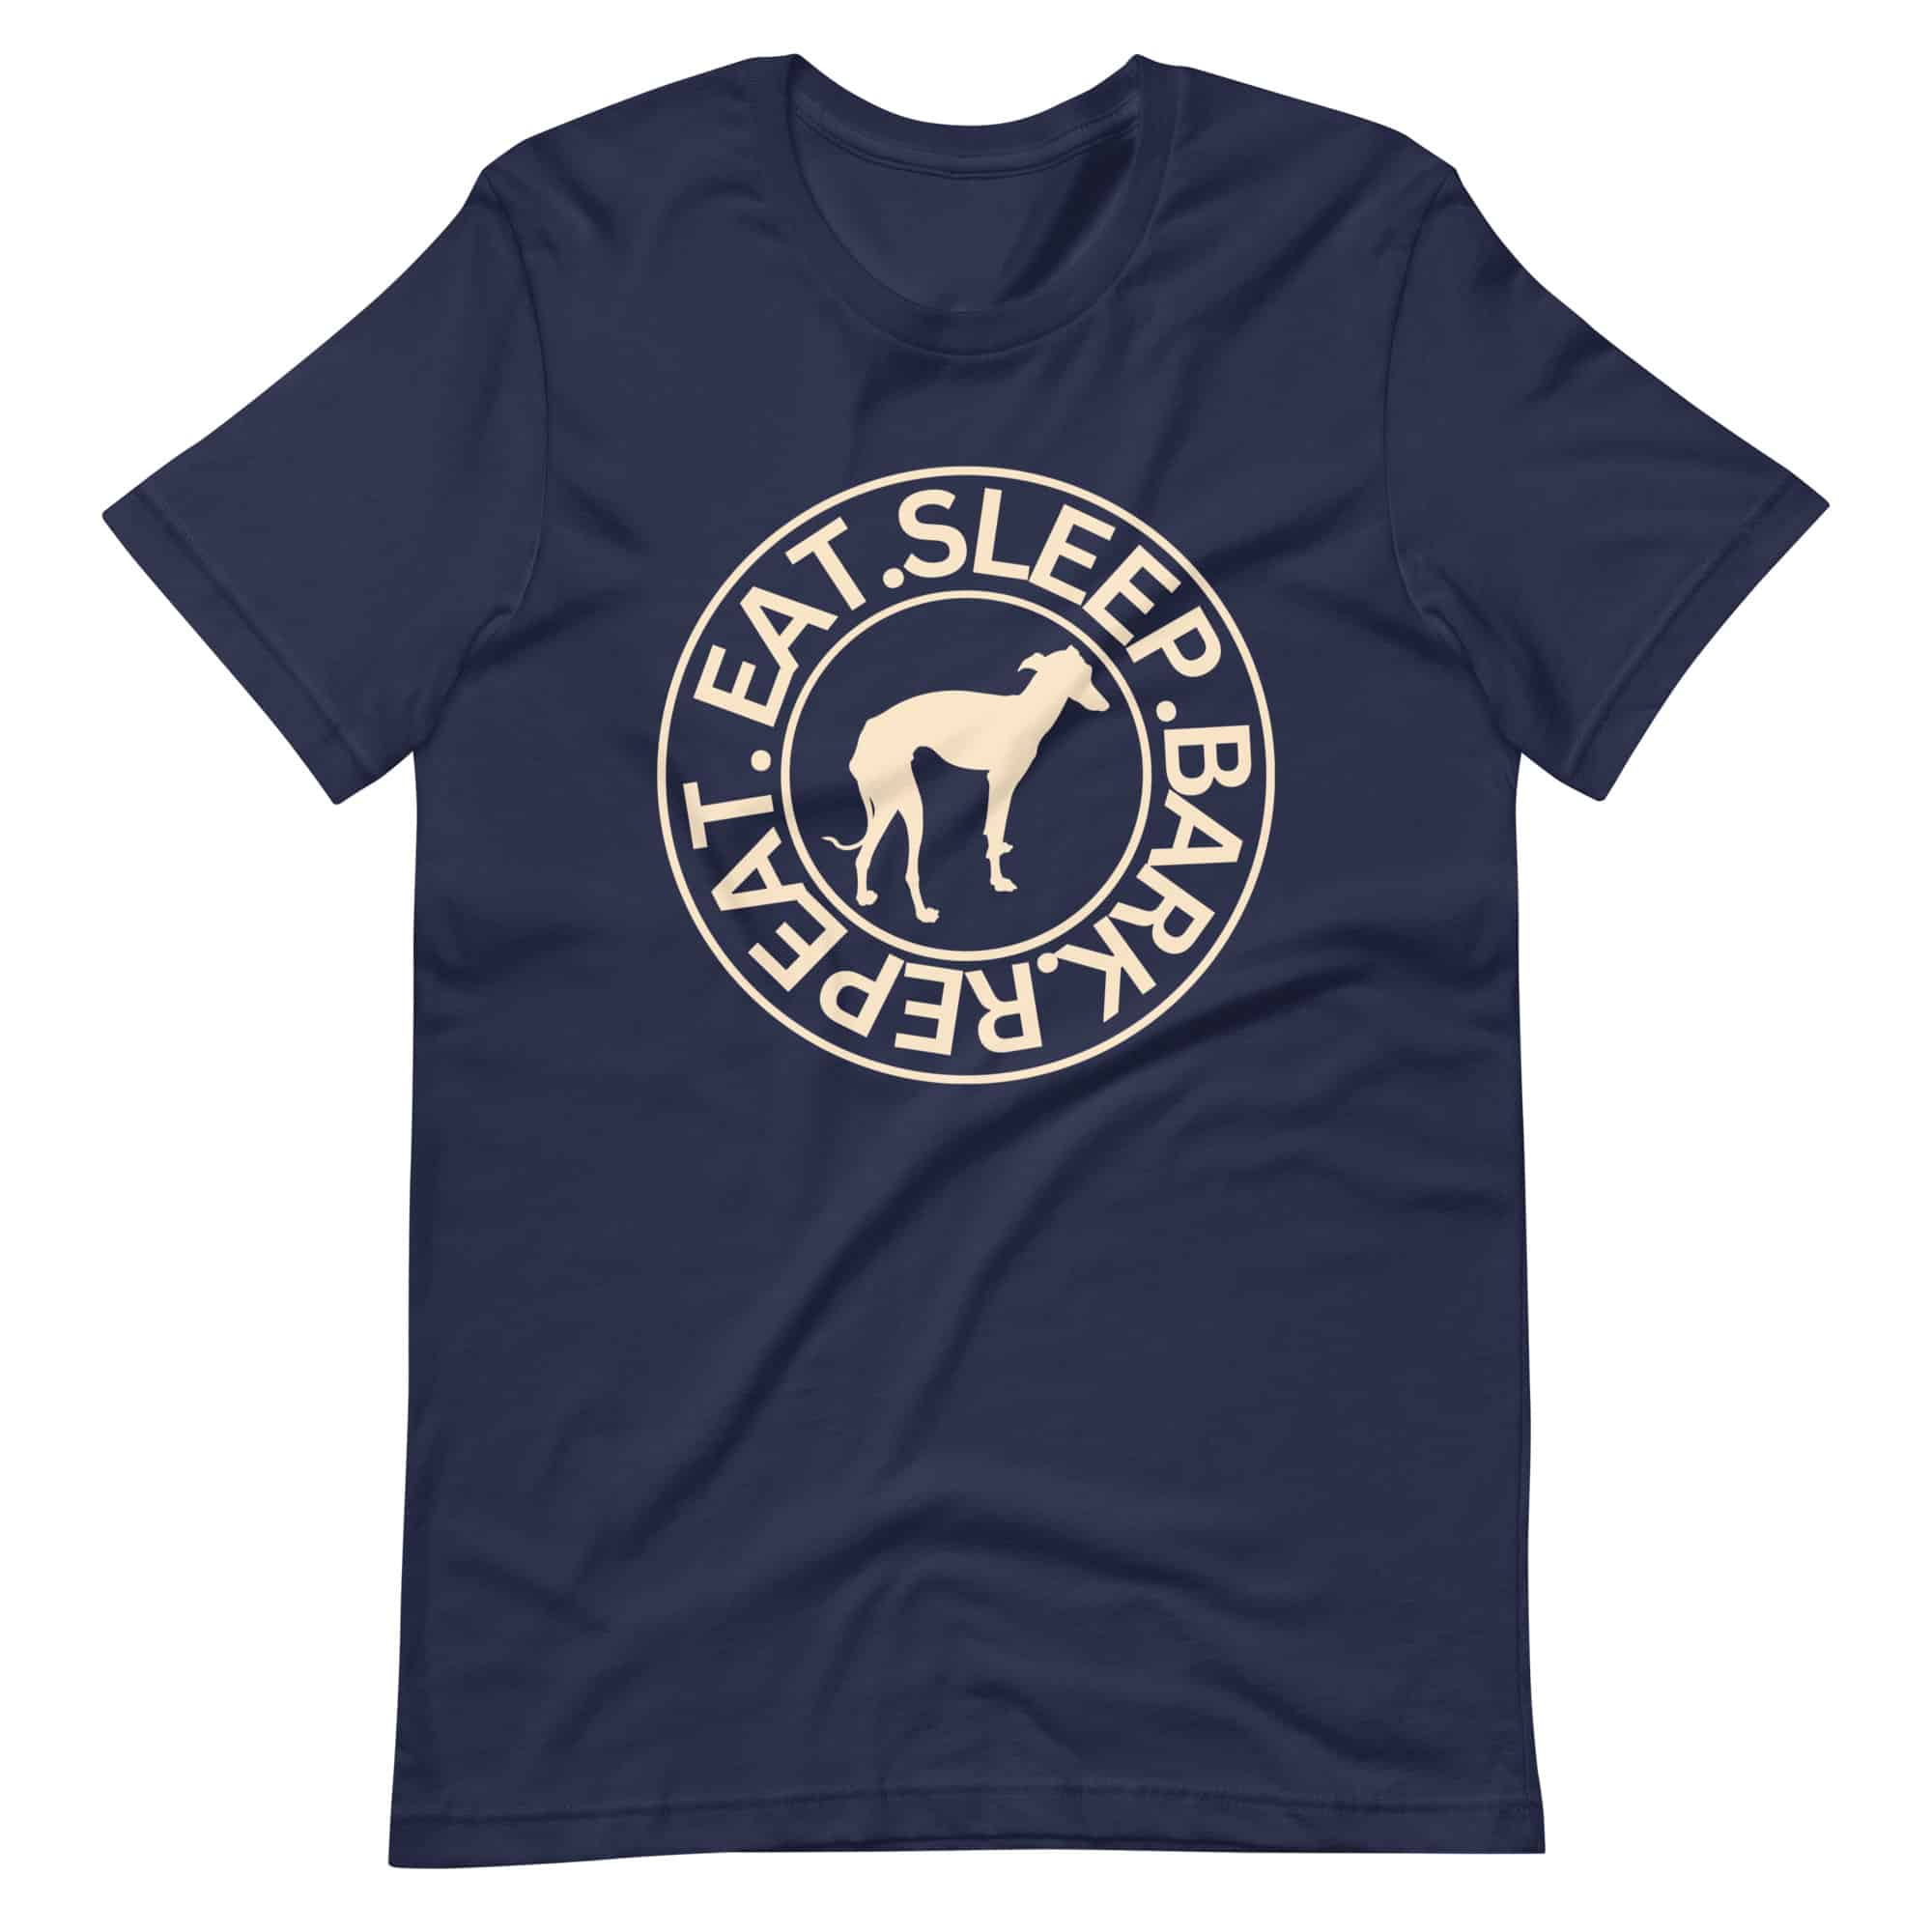 Eat Sleep Bark Repeat Italian Greyhound Unisex T-Shirt. Navy